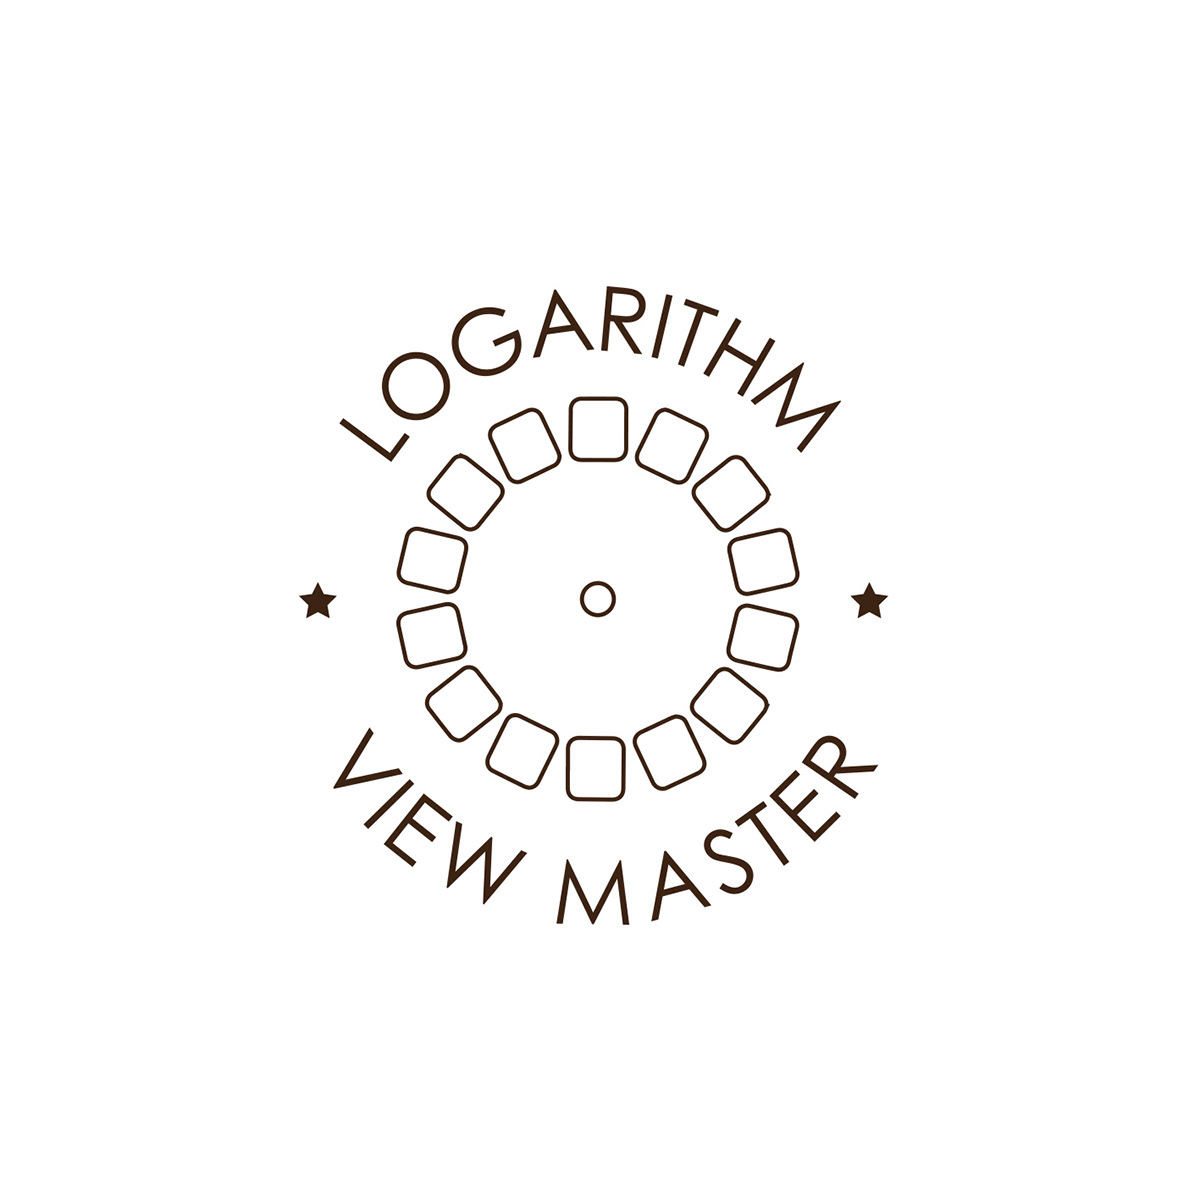 logarithm cassette label view master Compilation THESSALONIKI